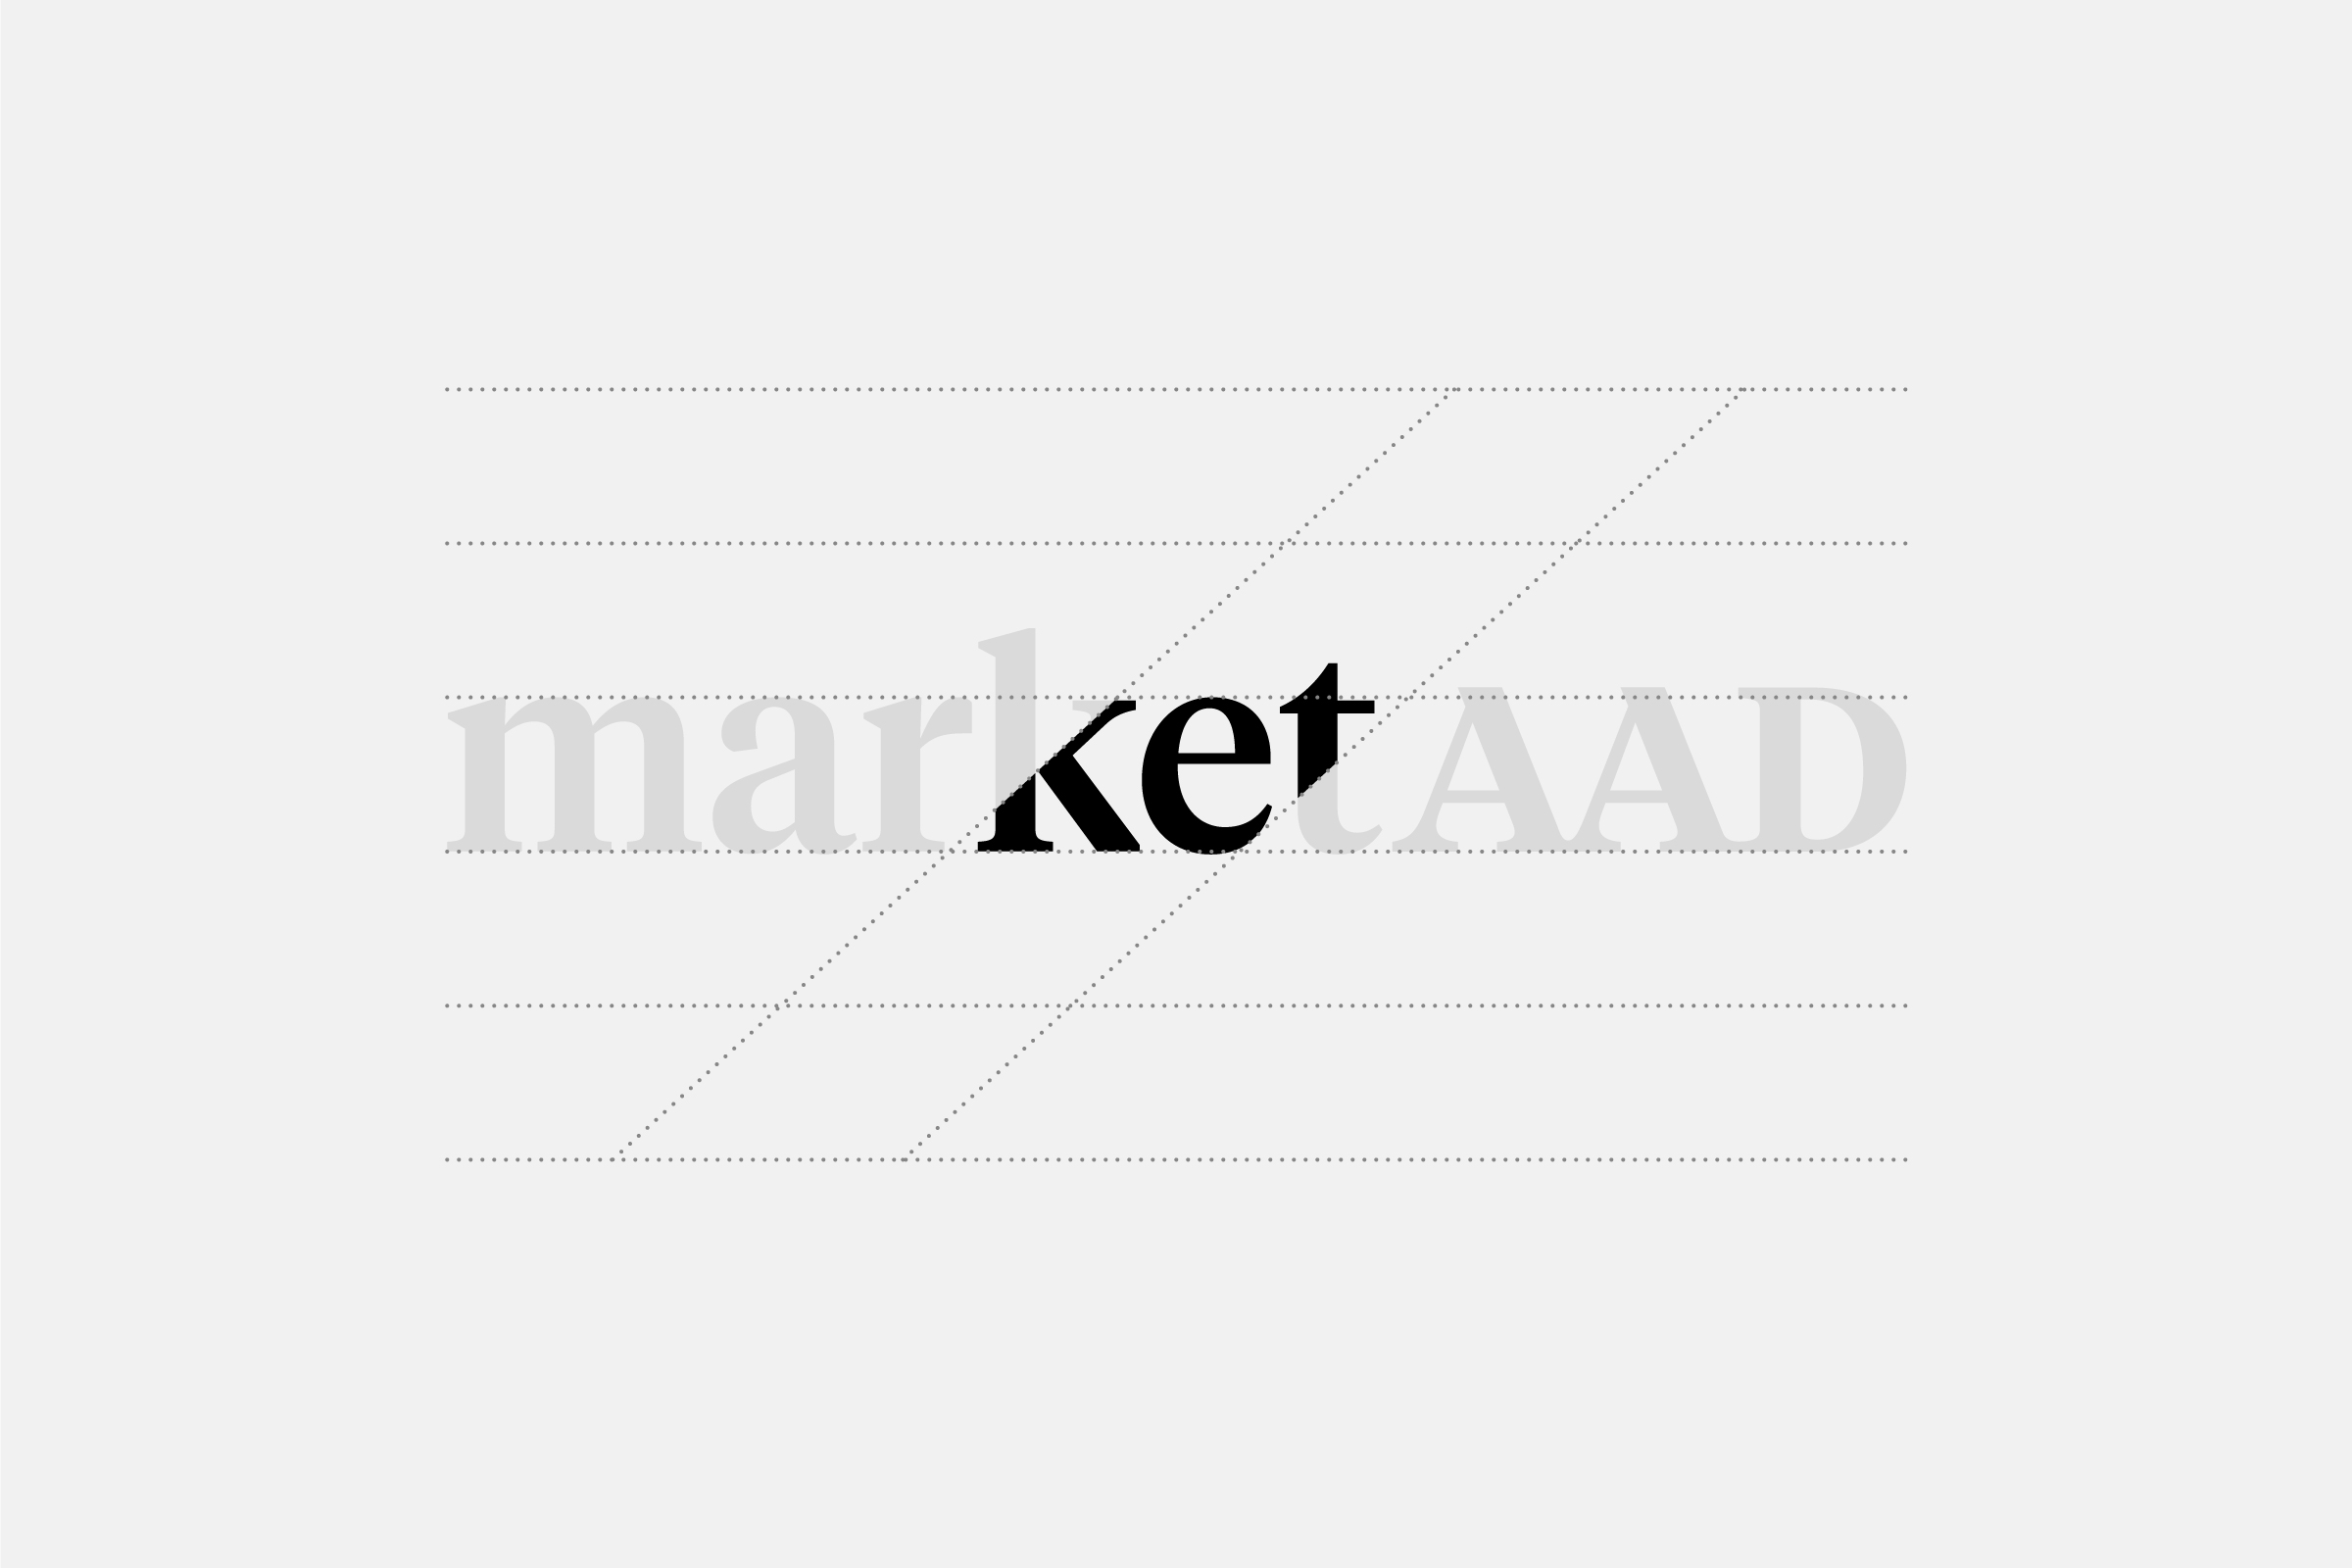 marketaad-logo-proces-2400x1600px_02b